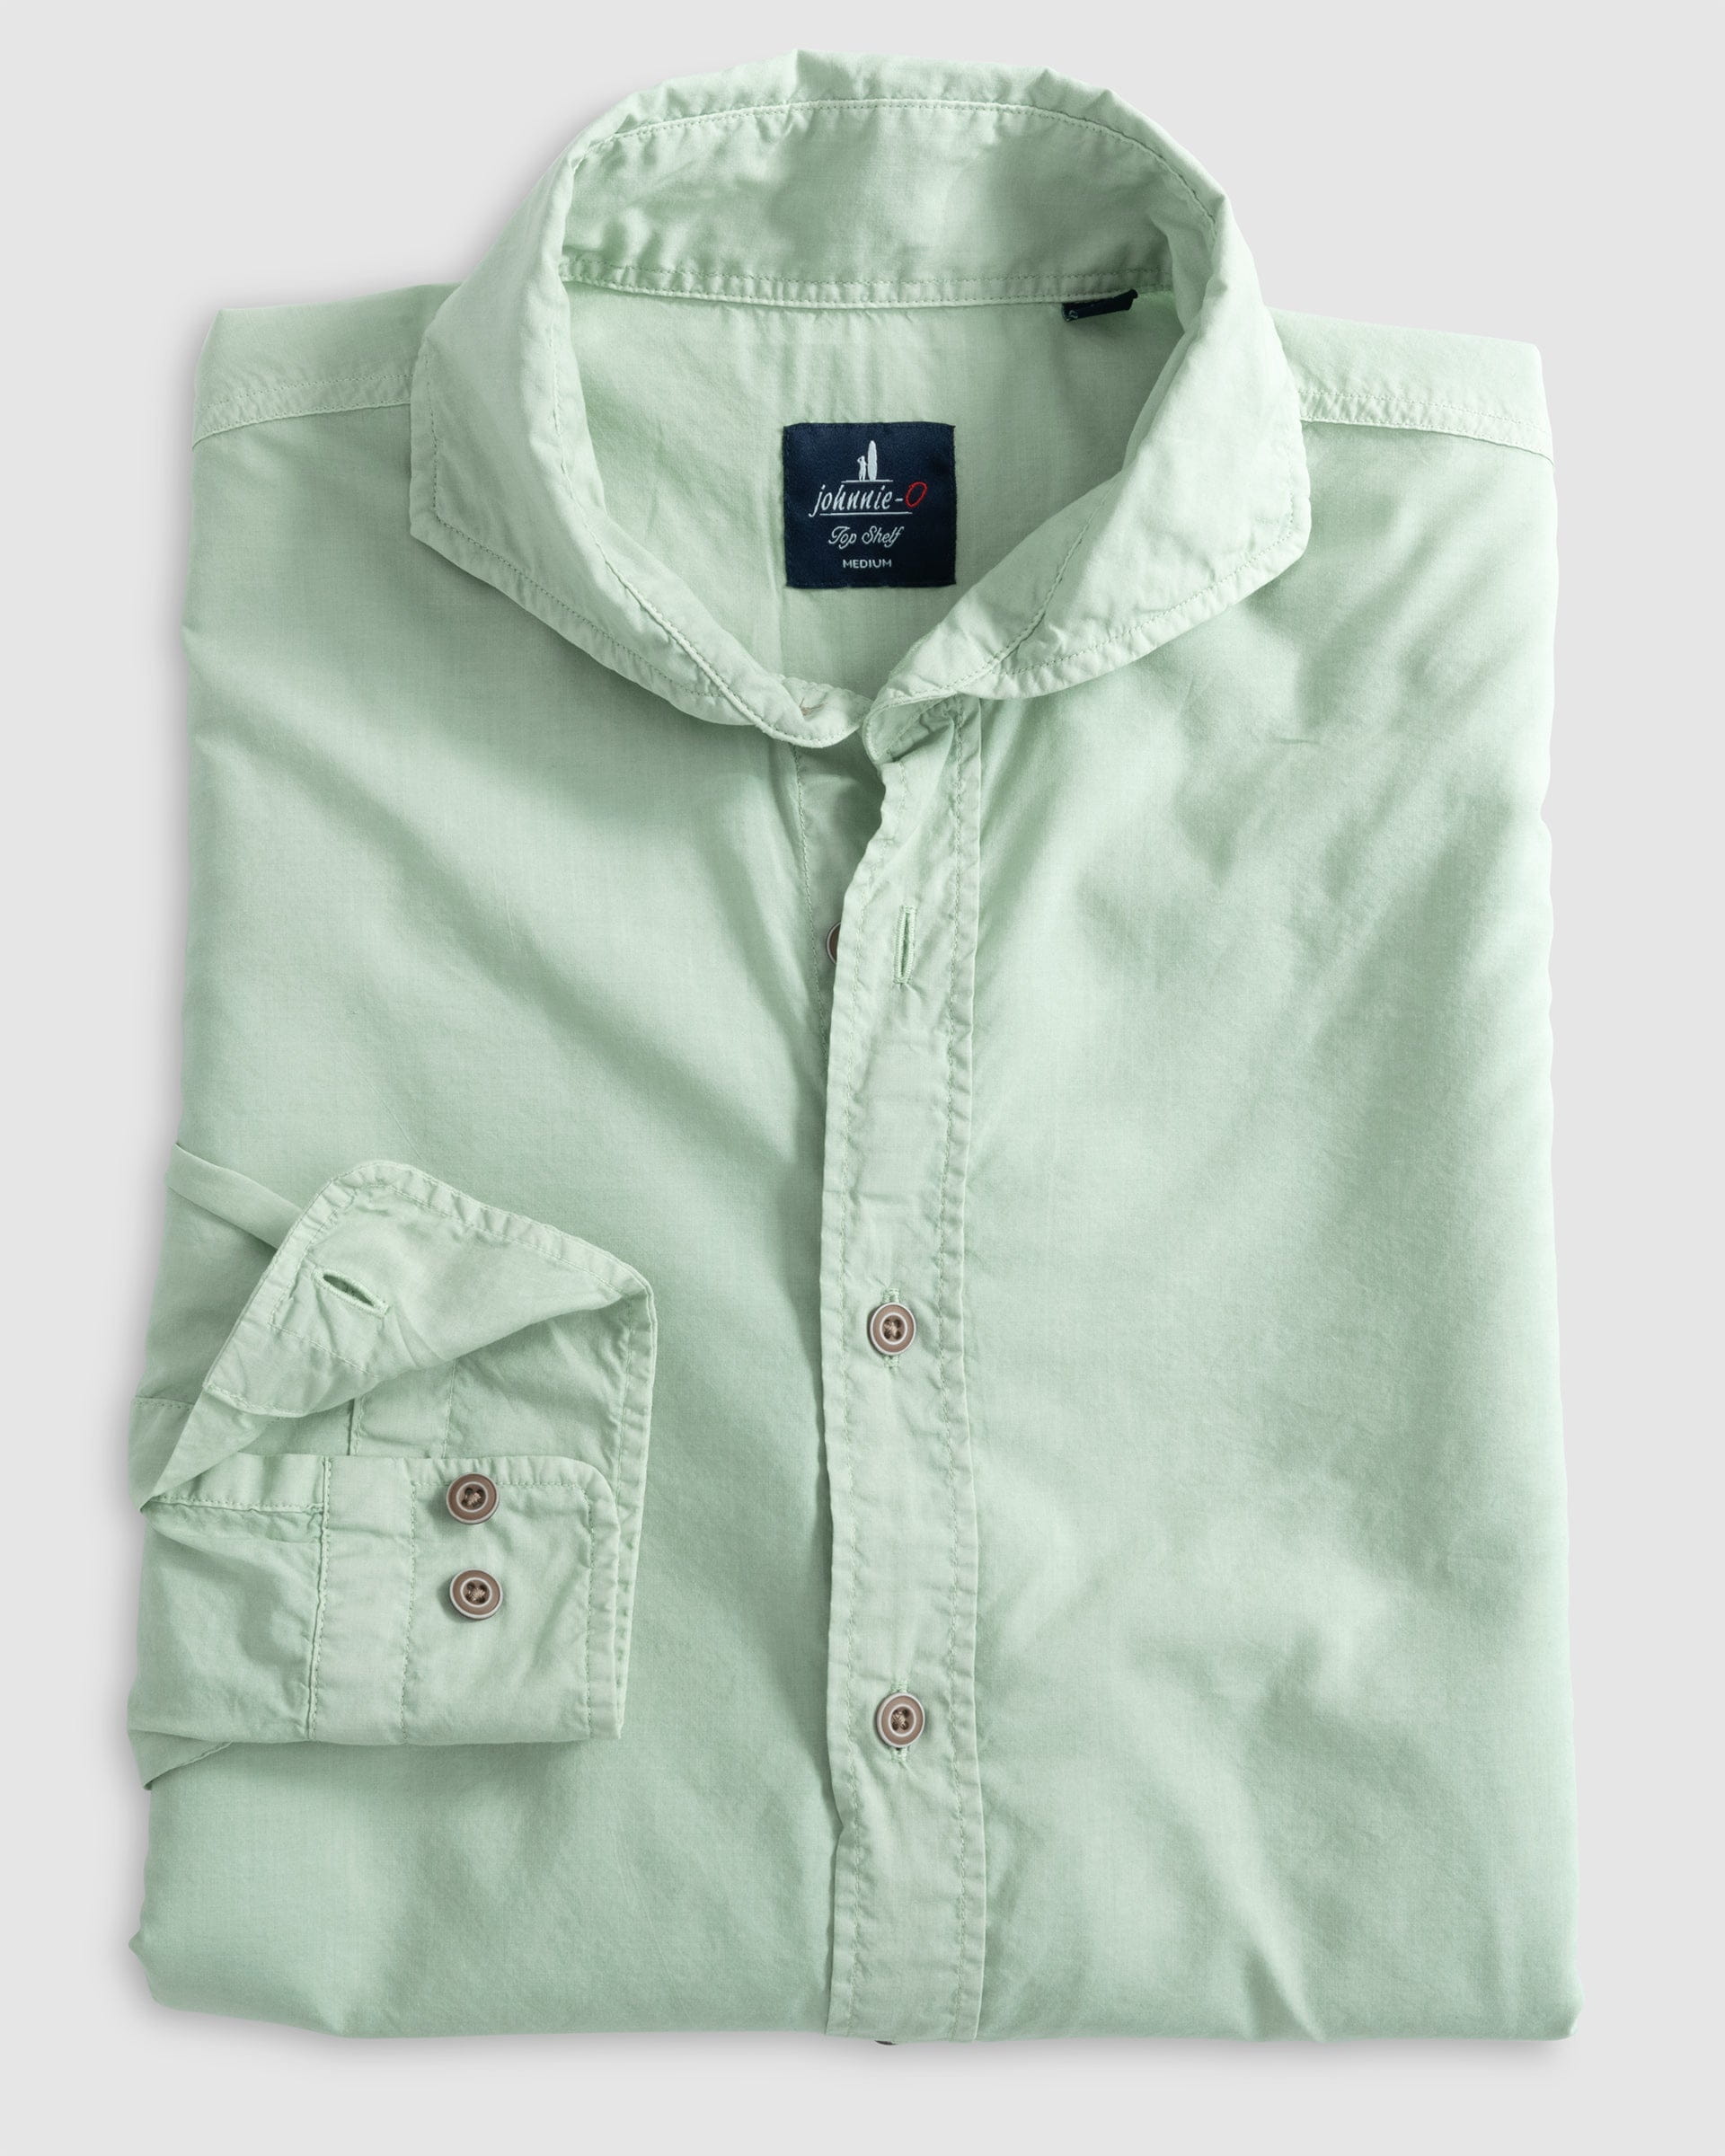 Albin Top Shelf Button Up Shirt